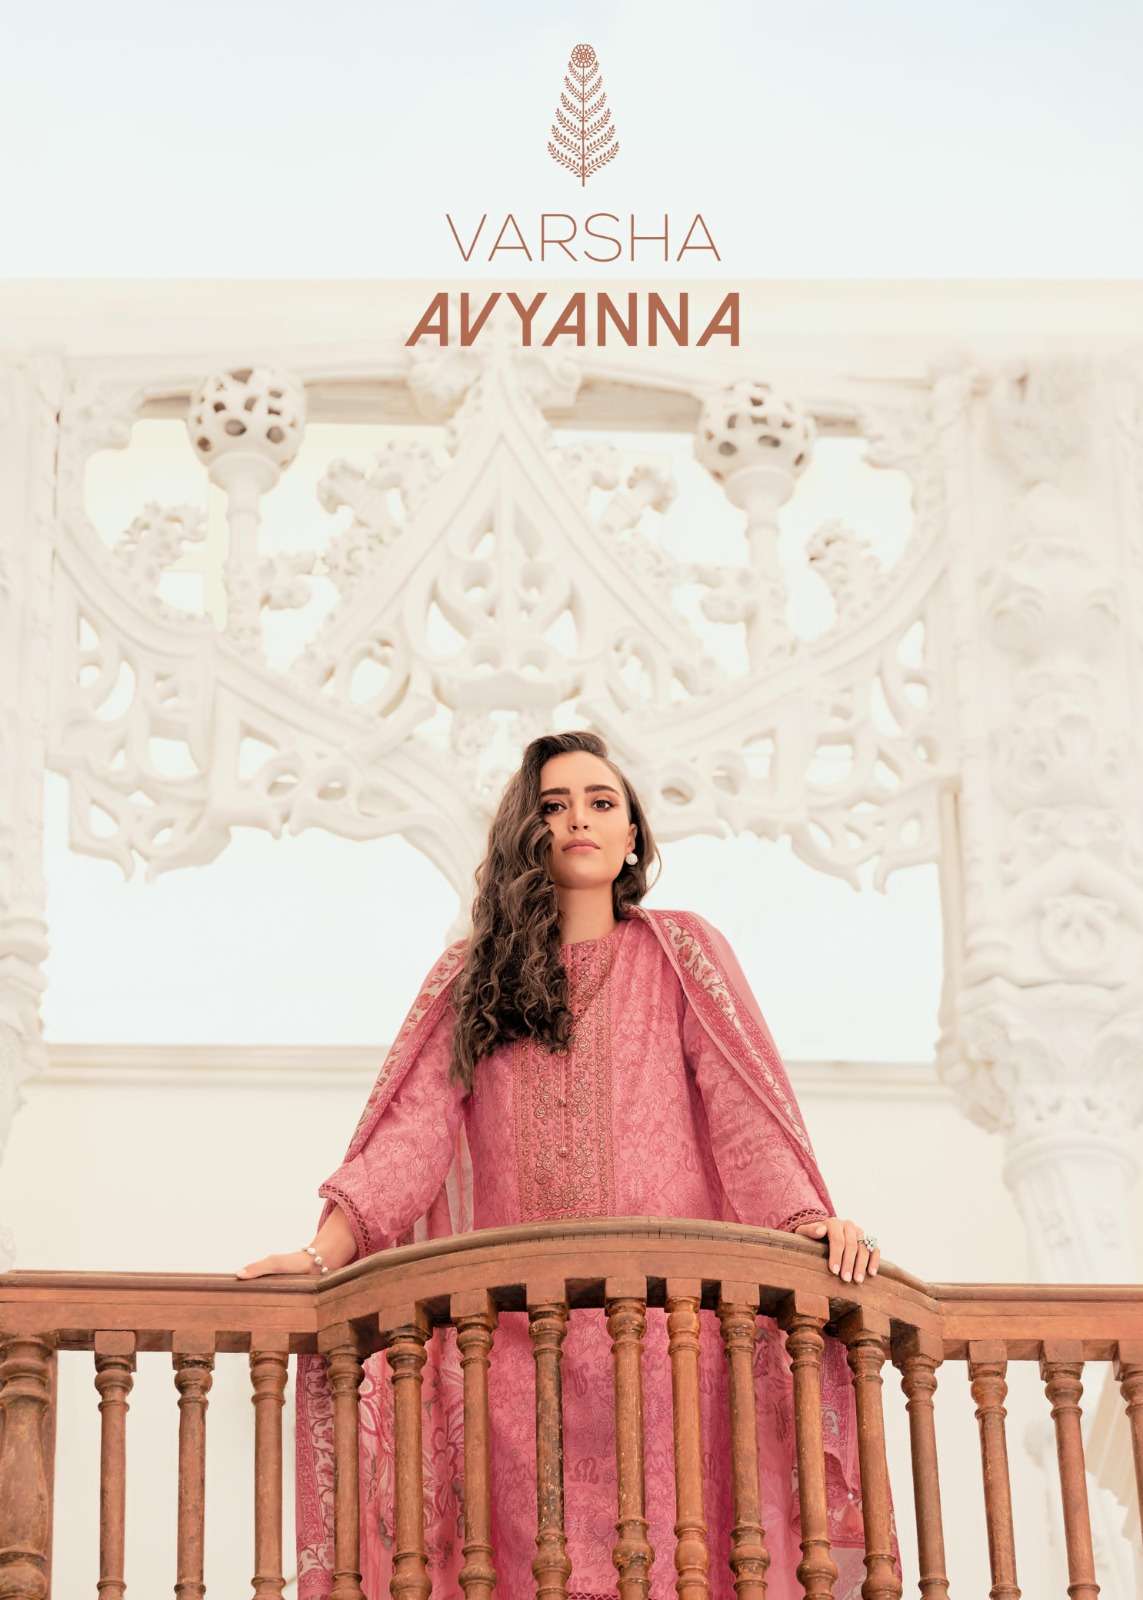 Varsha Avyanna Premium Cotton Suit Varsha Fashion Suit Exporters